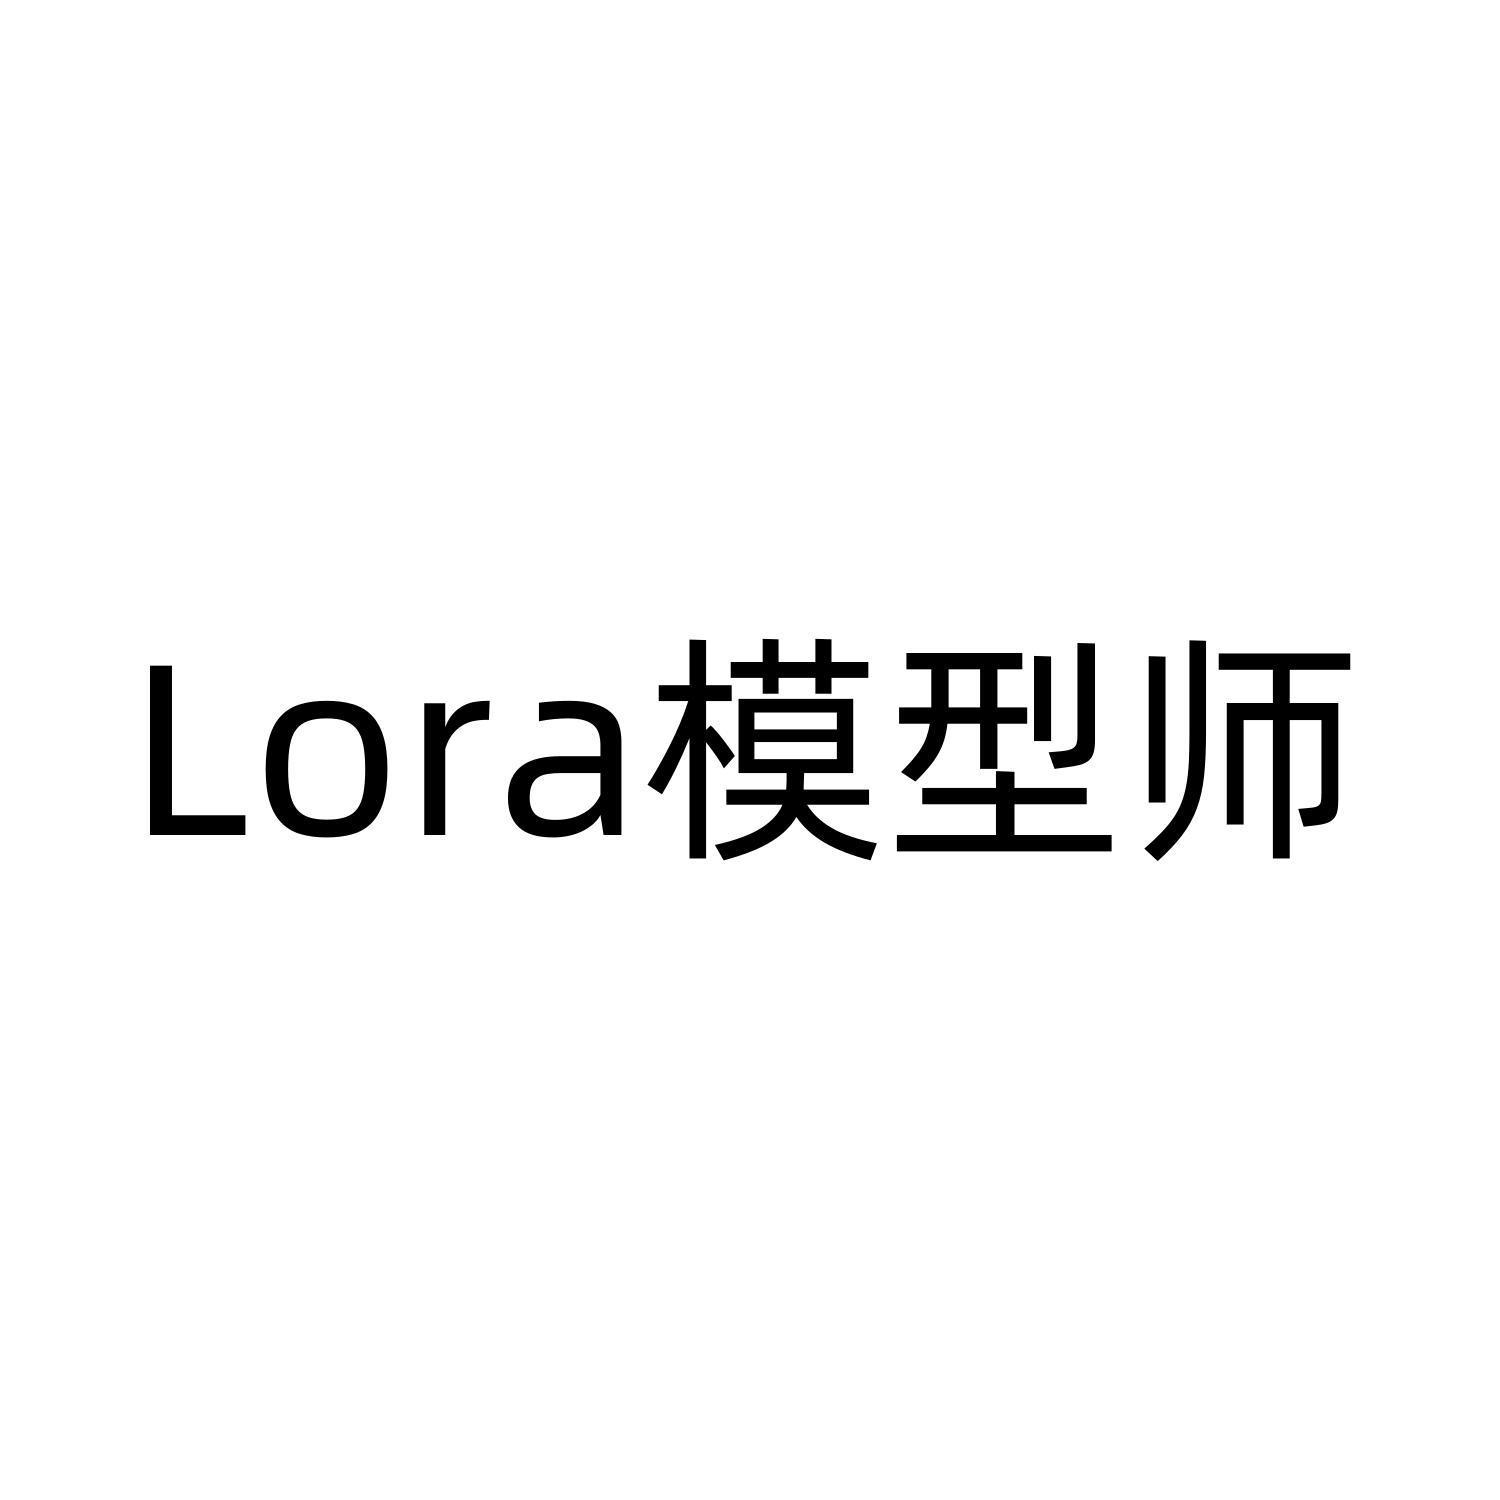 LORA模型师logo